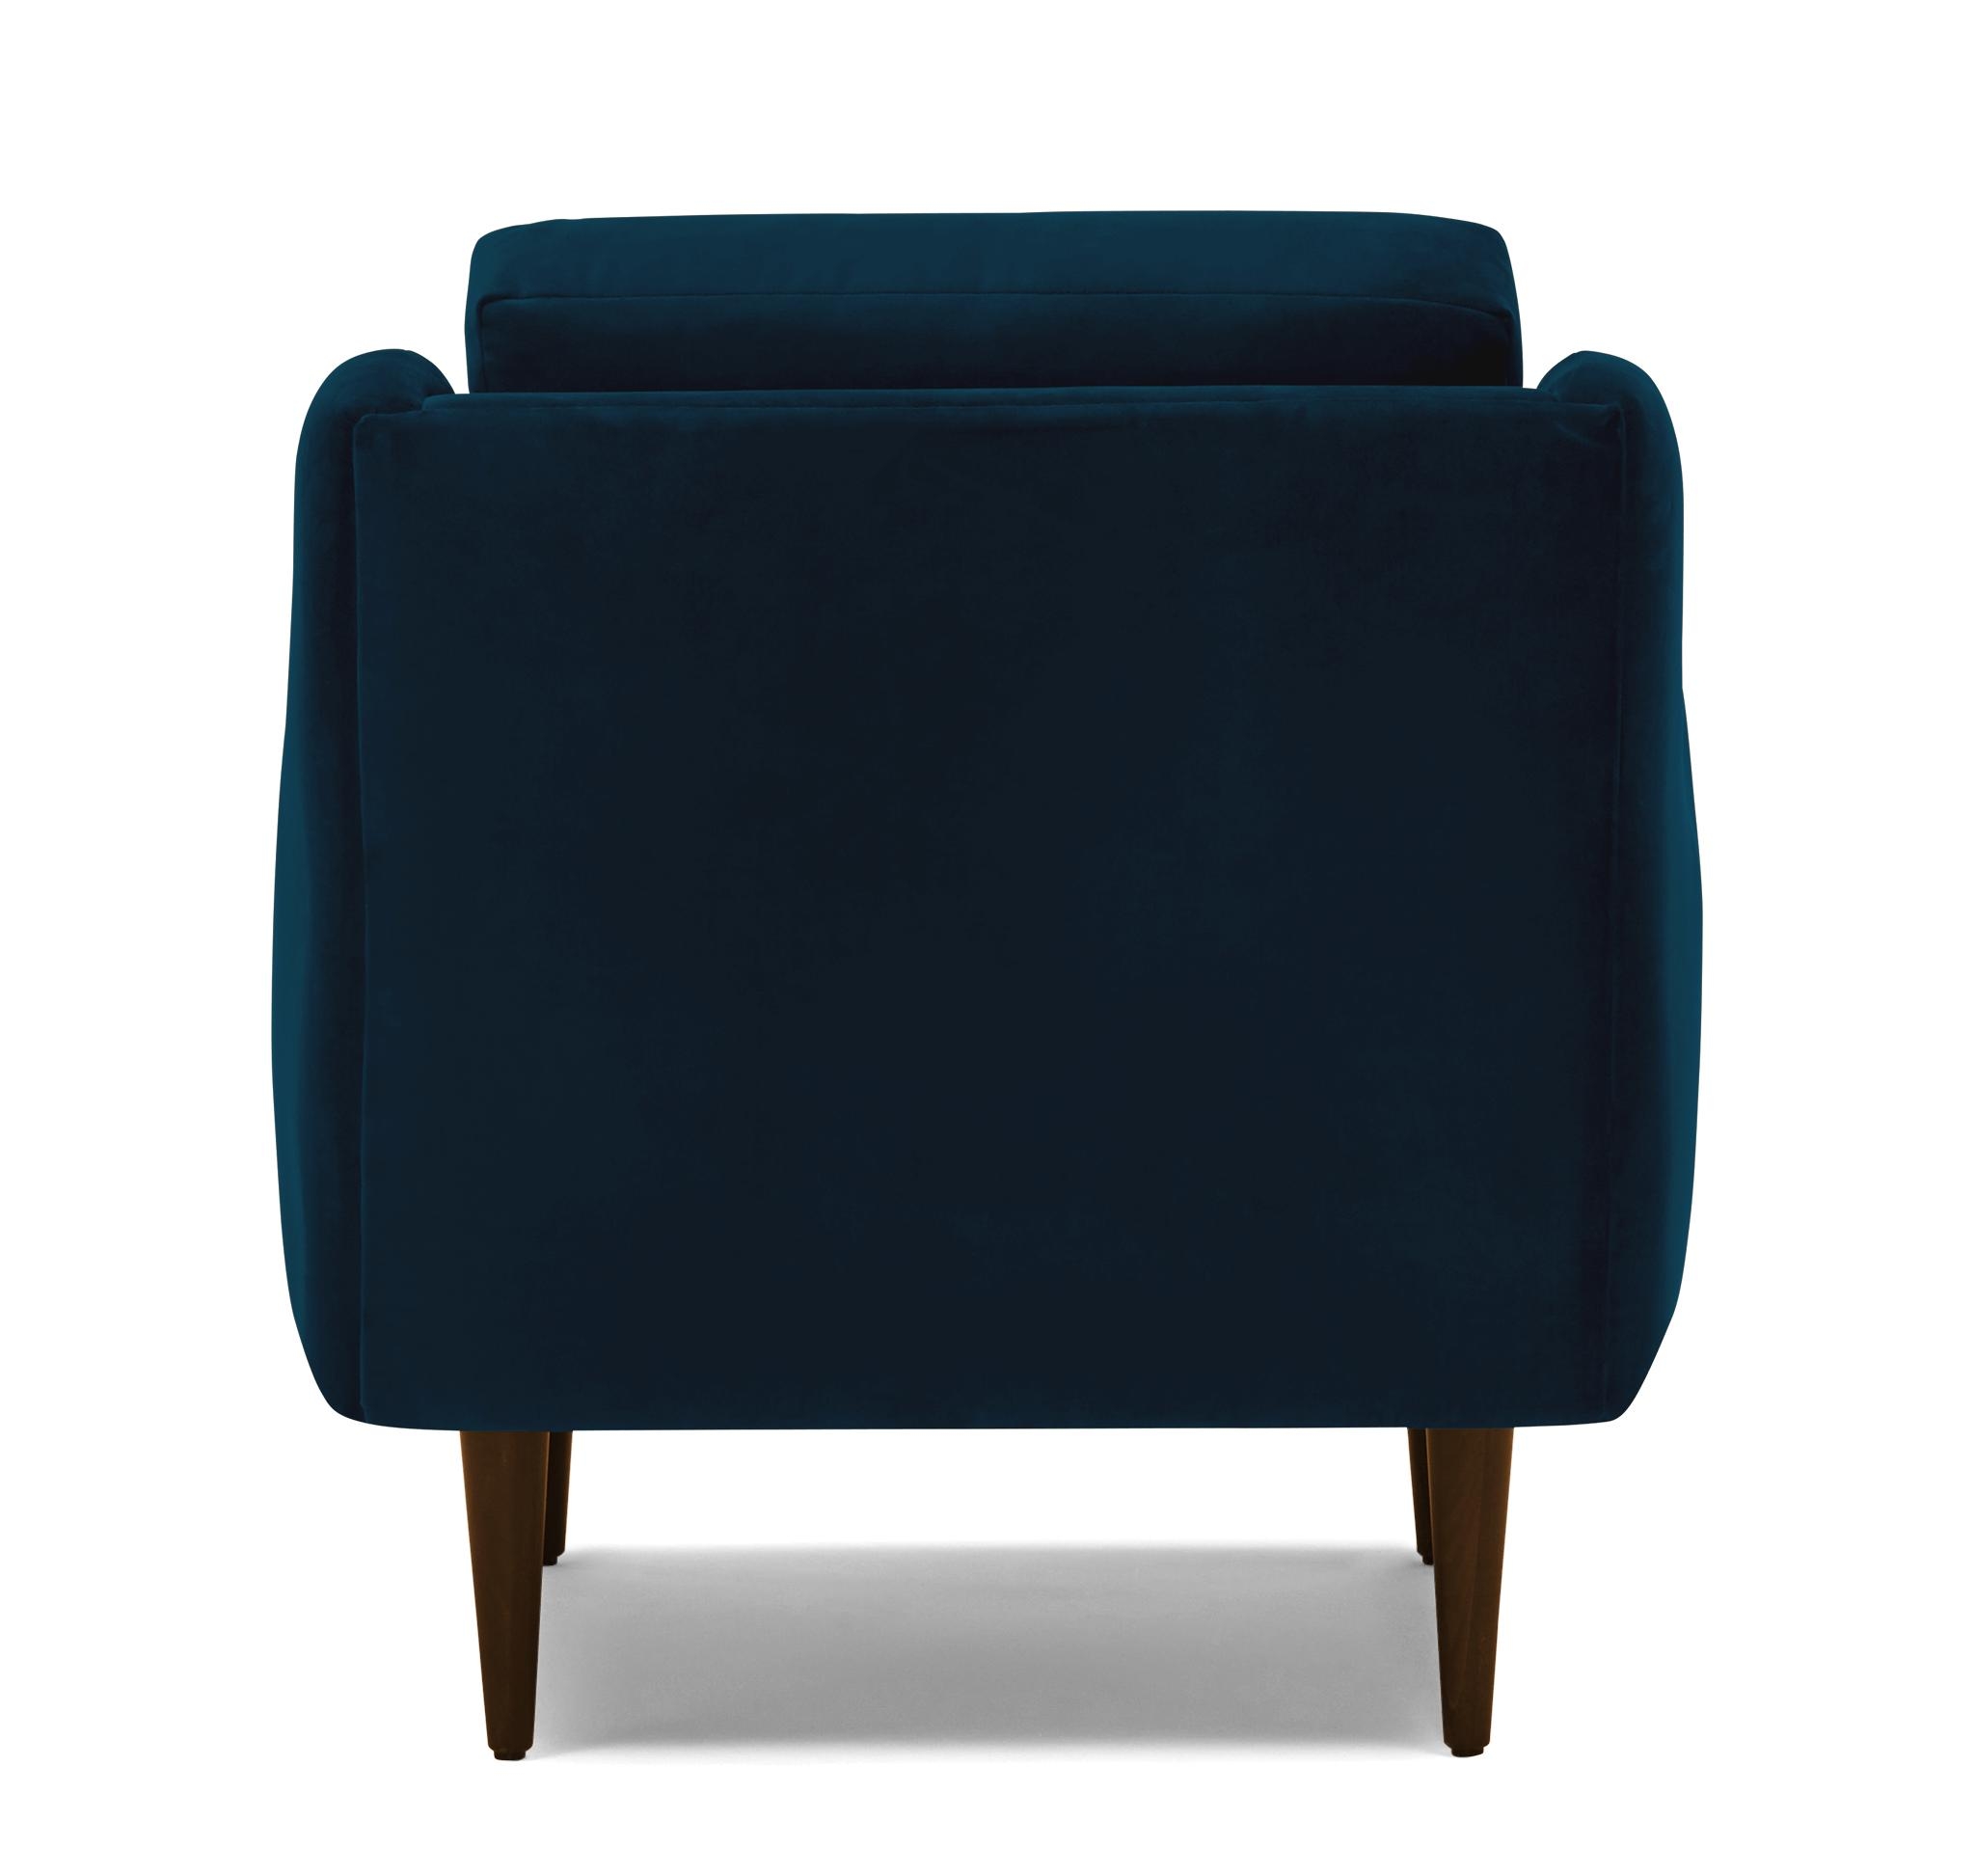 Blue Bell Mid Century Modern Chair - Key Largo Zenith Teal - Mocha - Image 4